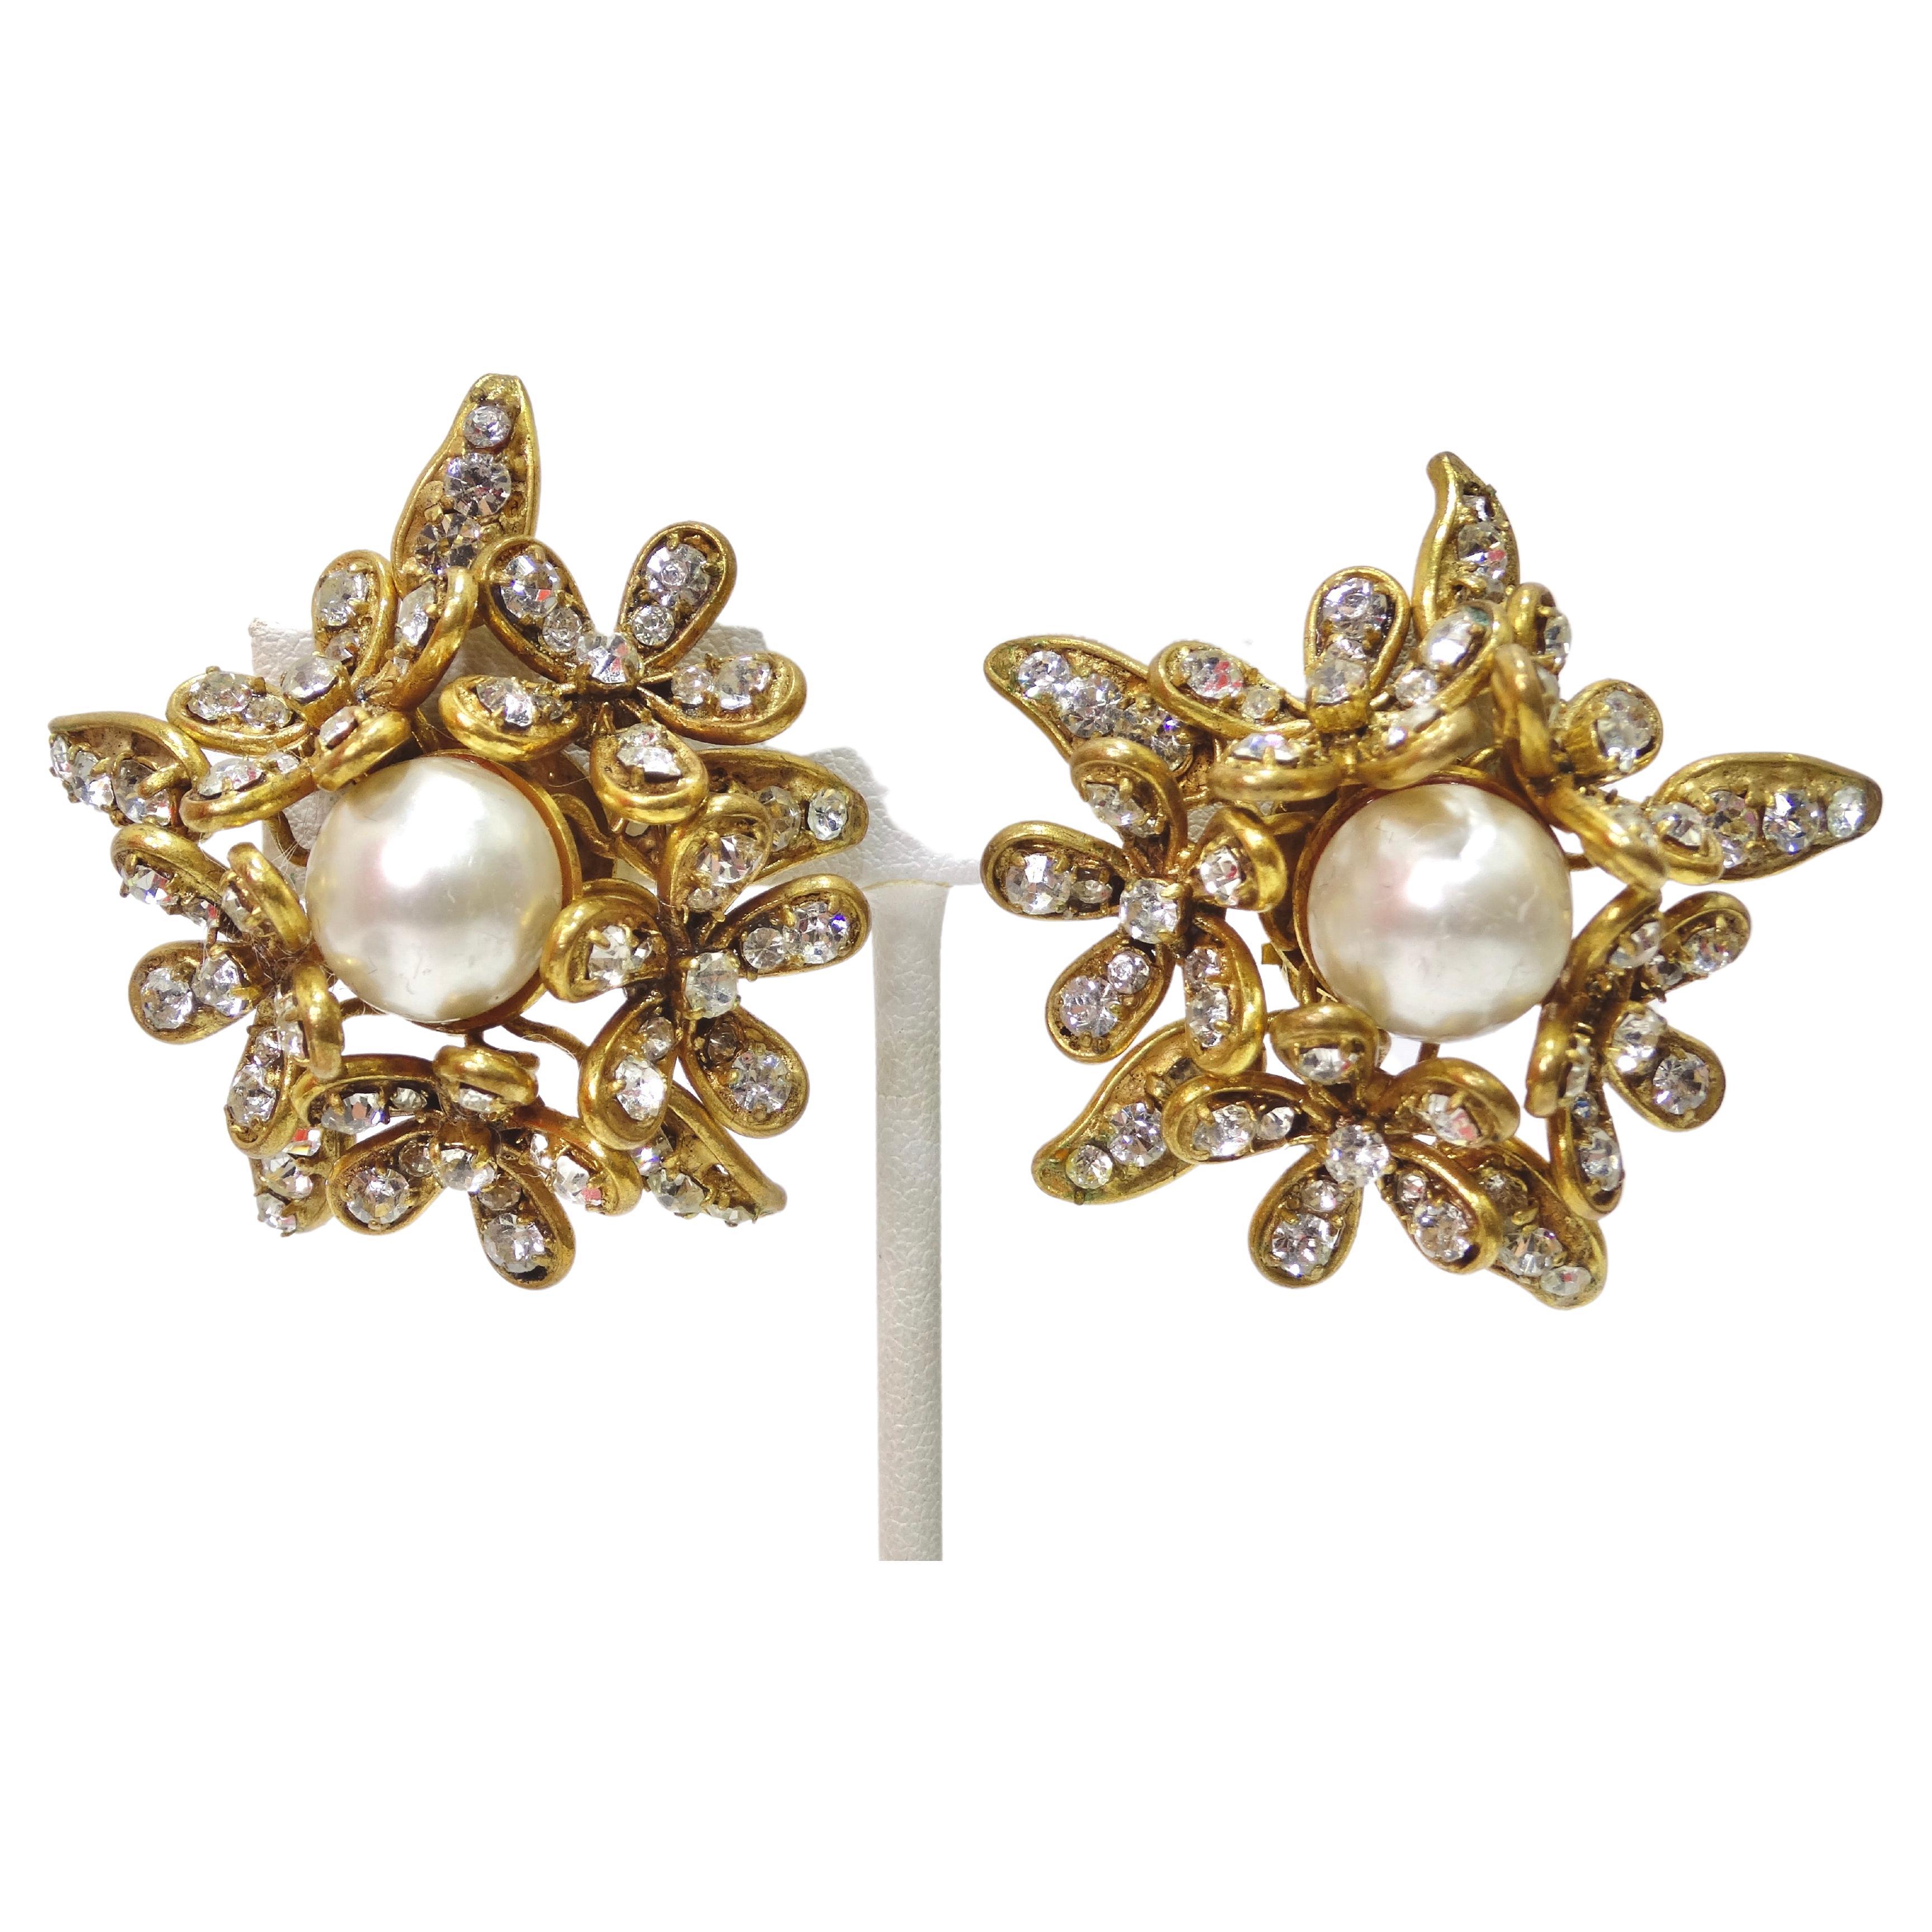 Chanel 1970's Crystal/Pearl Flower Earrings